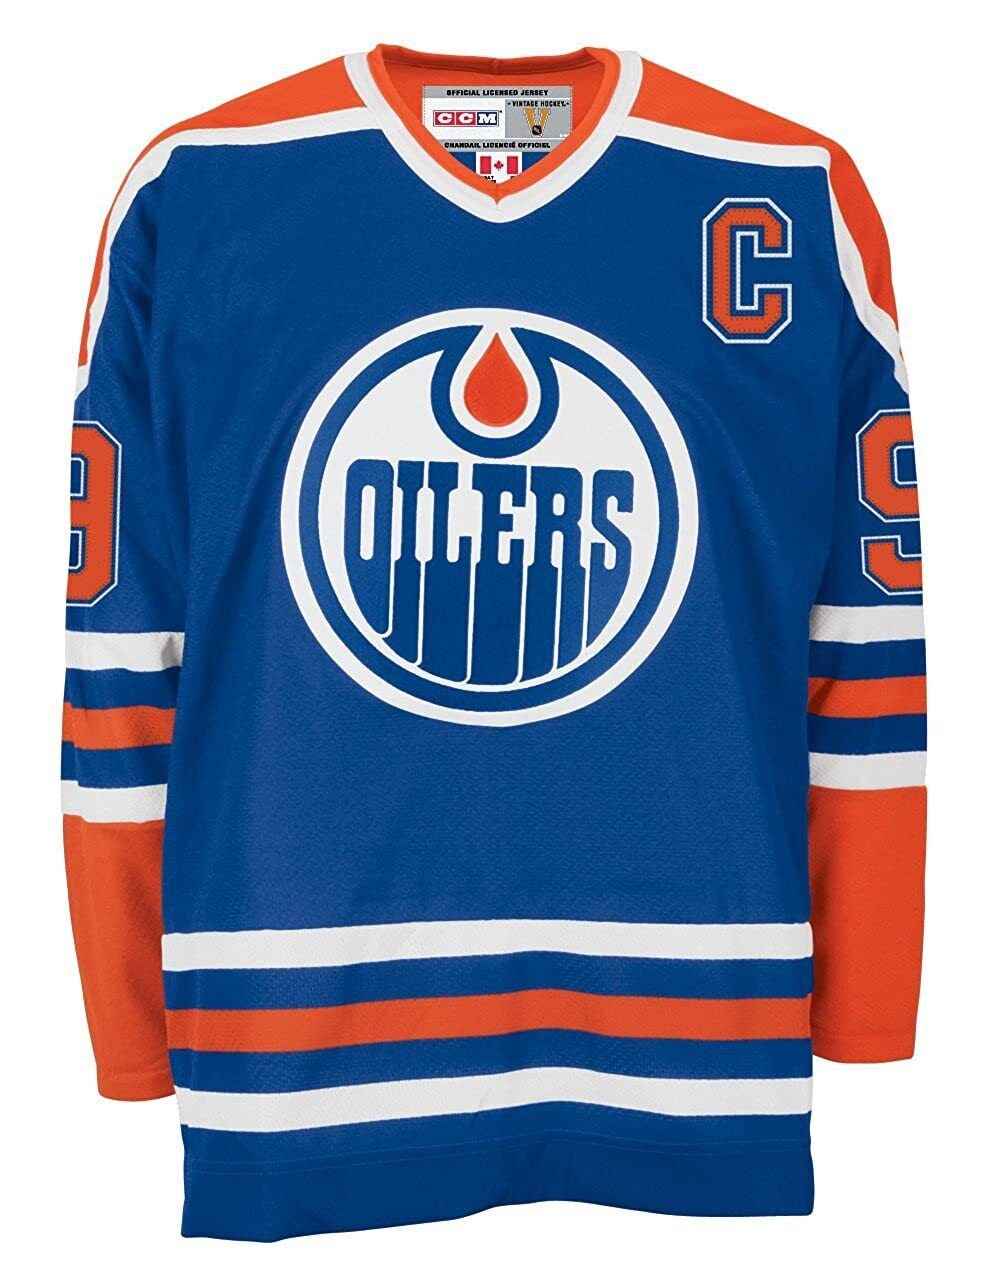 Vintage 80s Wayne Gretzky Edmonton Oilers Sandow SK Hockey 